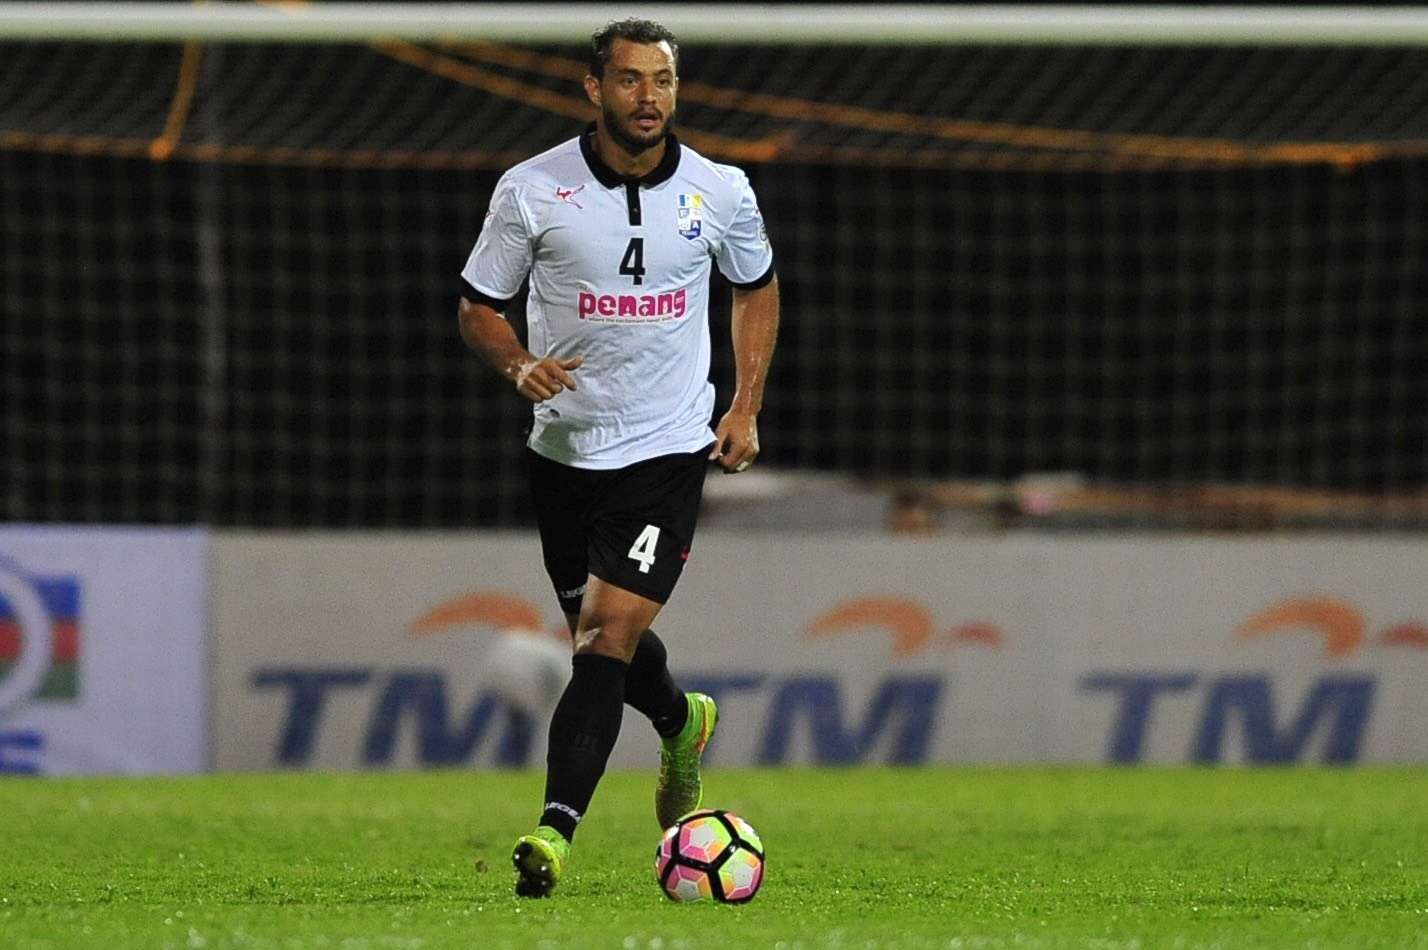 Pulau Pinang's Reinaldo Lobo playing against Selangor 21/1/2017